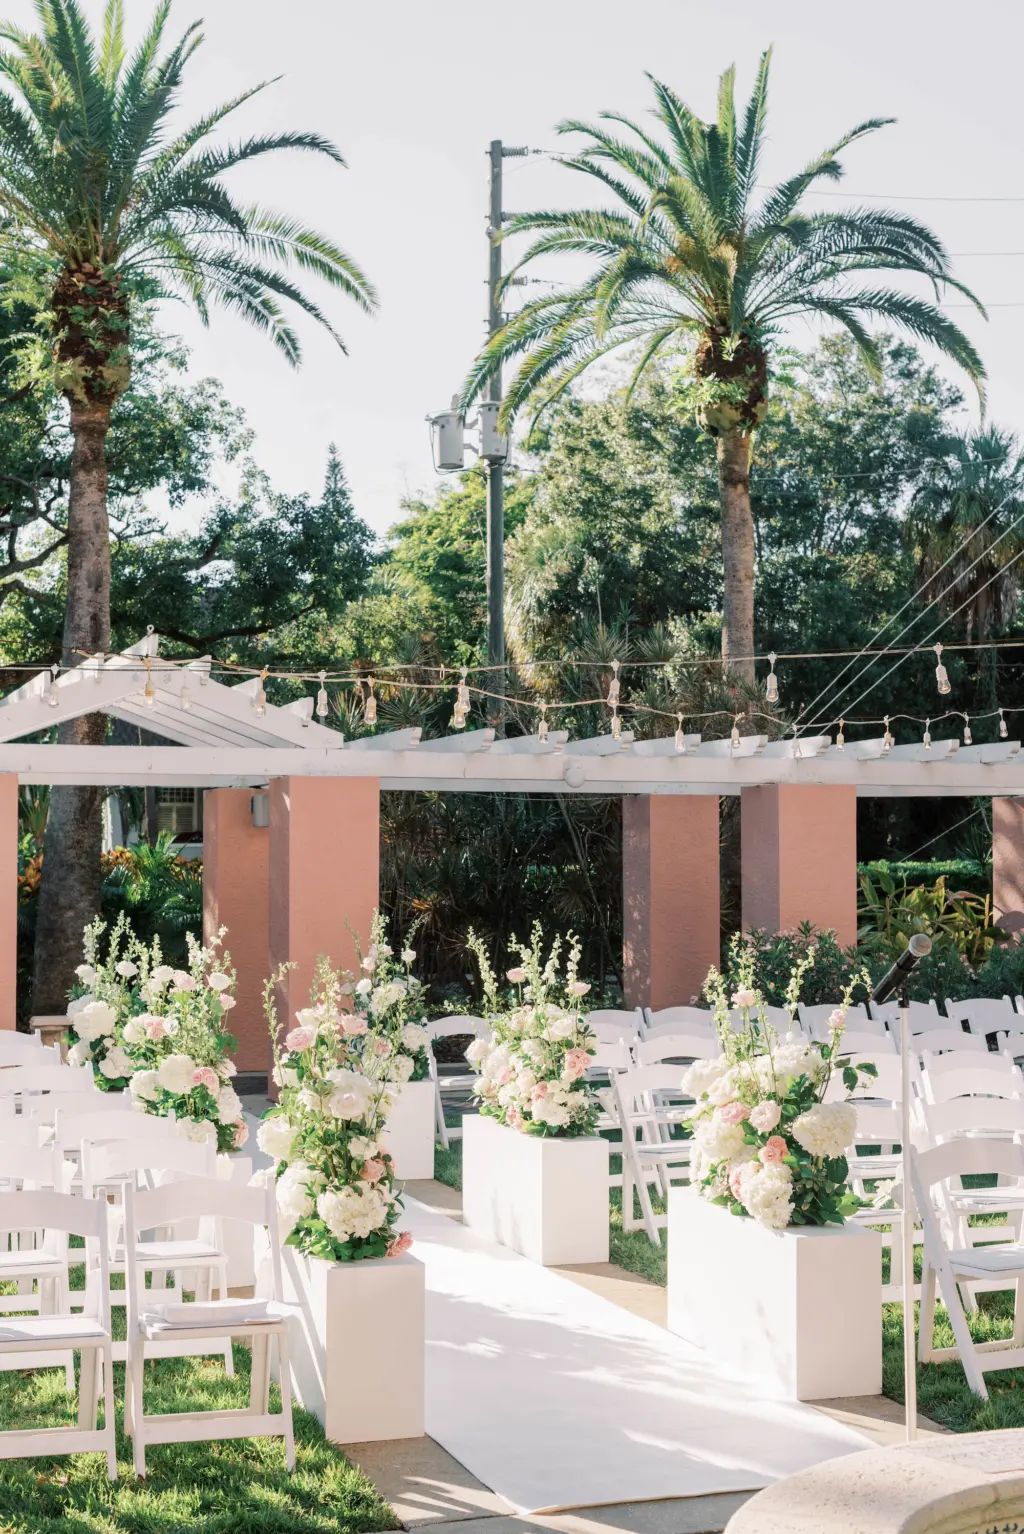 Outdoor Old Florida Tea Garden Wedding Ceremony Inspiration | St Pete Venue The Vinoy | Florist Bruce Wayne Florals